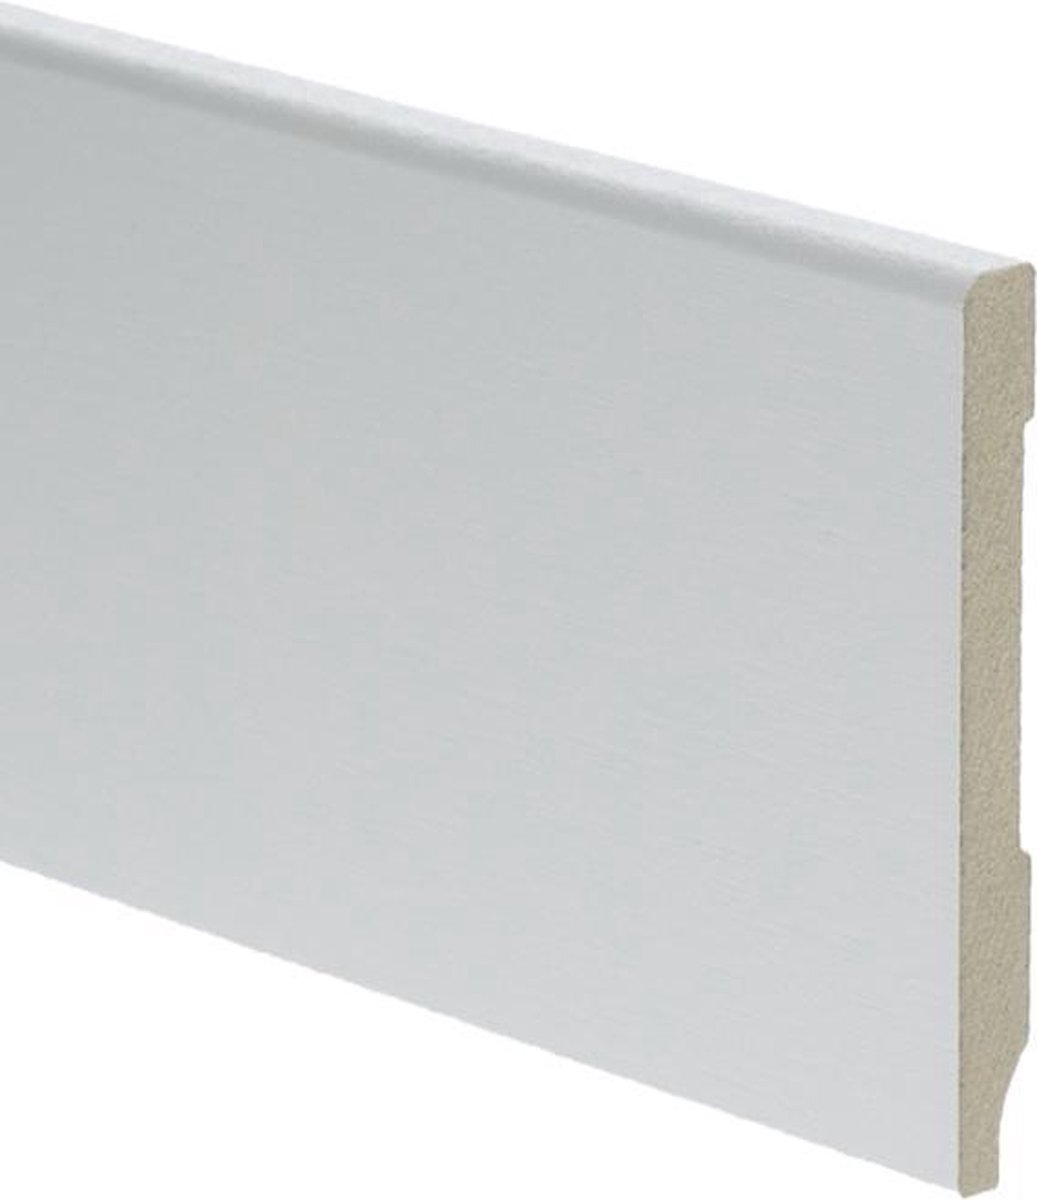 Hoge plinten - MDF - Moderne plint 90x9 mm - Wit - Voorgelakt - RAL 9010 - Per 5 stuks 2,4m